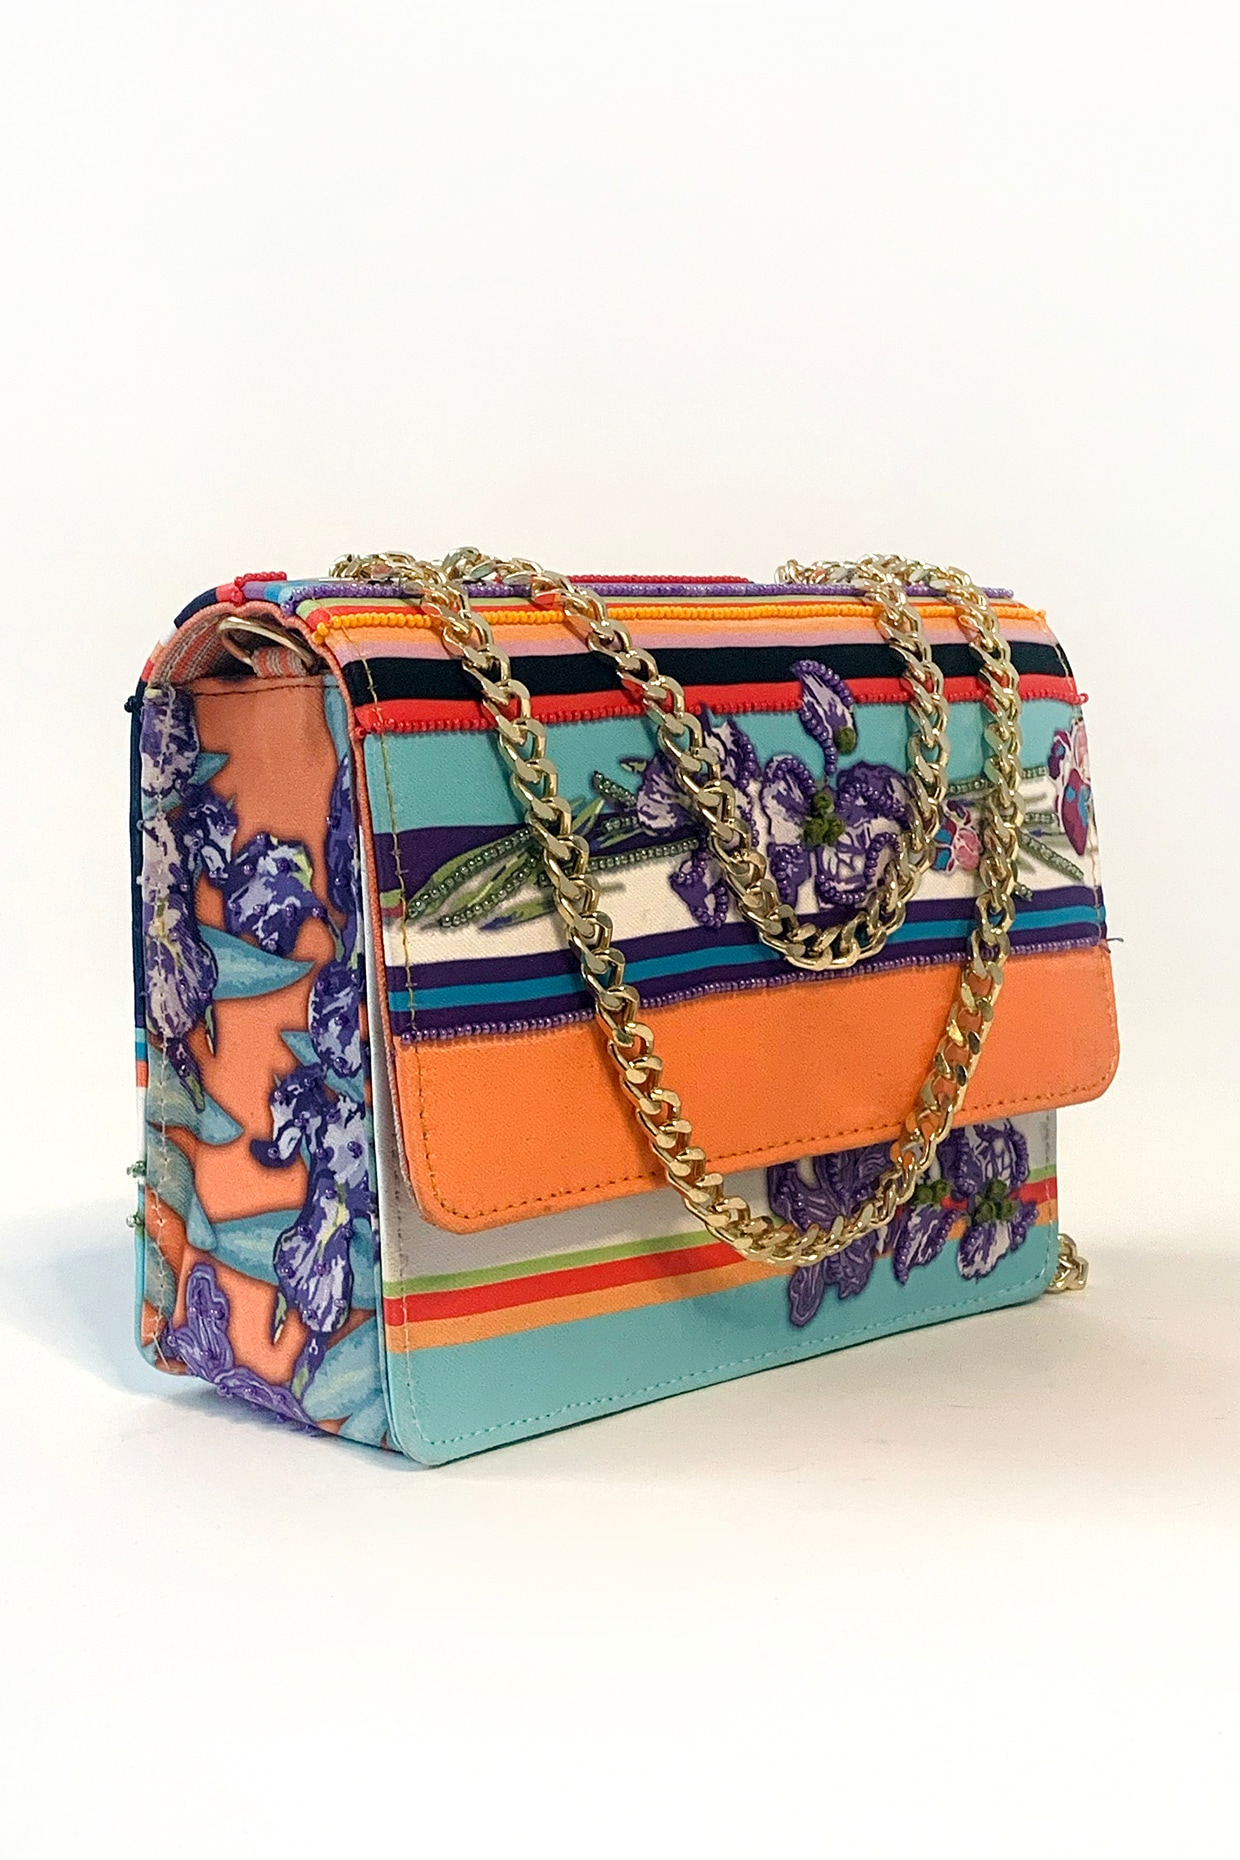 Buy Heshe Women's Multi-color Shoulder Bag Hobo Tote Handbag Cross Body  Purse (Colorful-2B4029) at Amazon.in